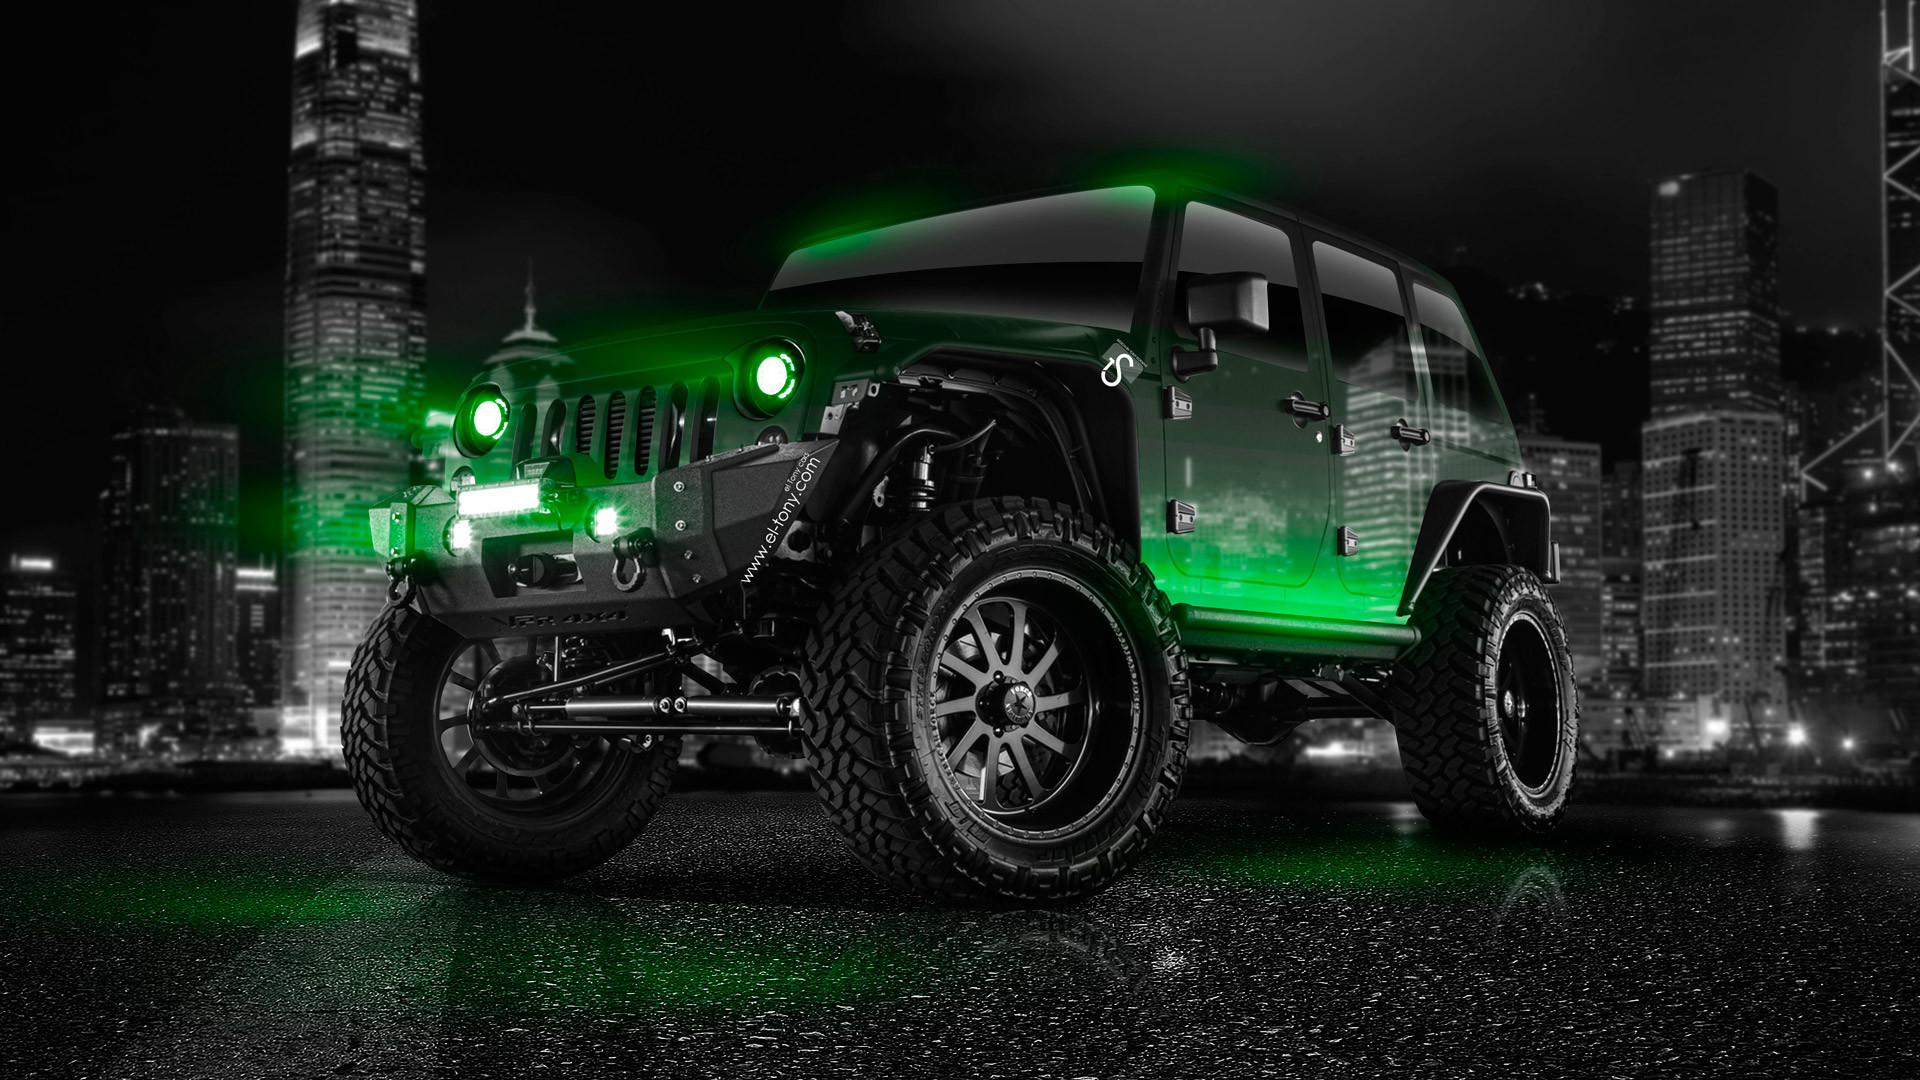 Jeep Wrangler Crystal City Car 2014 Green Neon